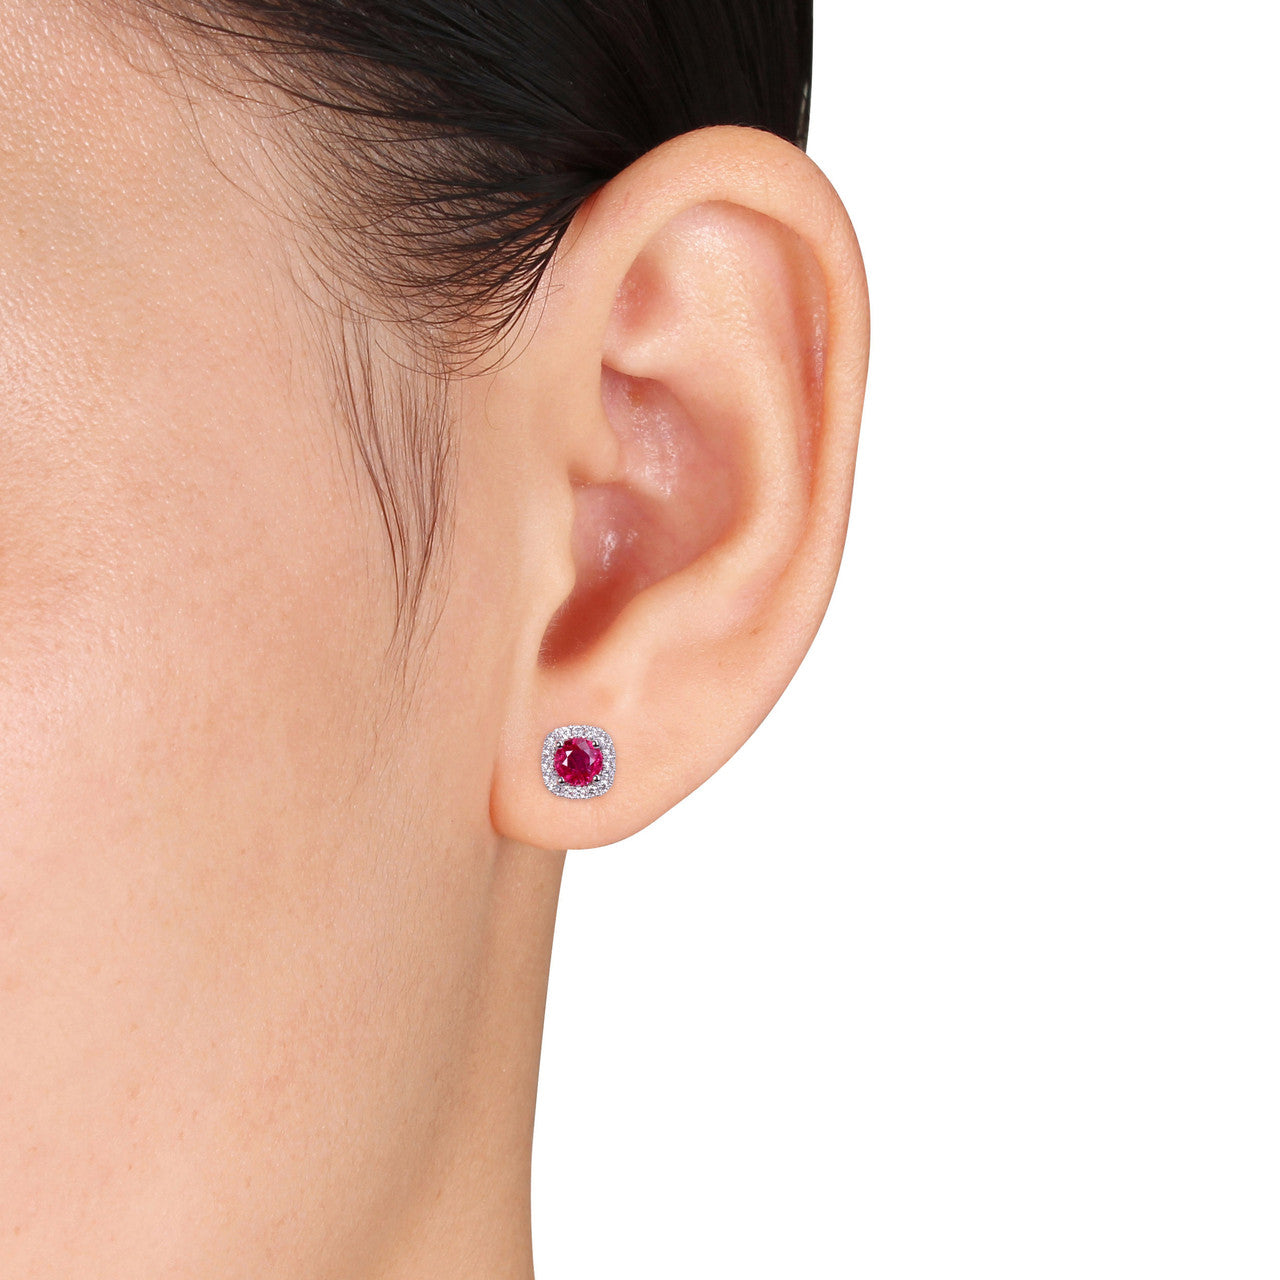 Ice Jewellery 1/4 CT Diamond TW and 1 1/5 CT TGW Ruby Ear Pin Earrings in 14k White Gold - 75000004889 | Ice Jewellery Australia